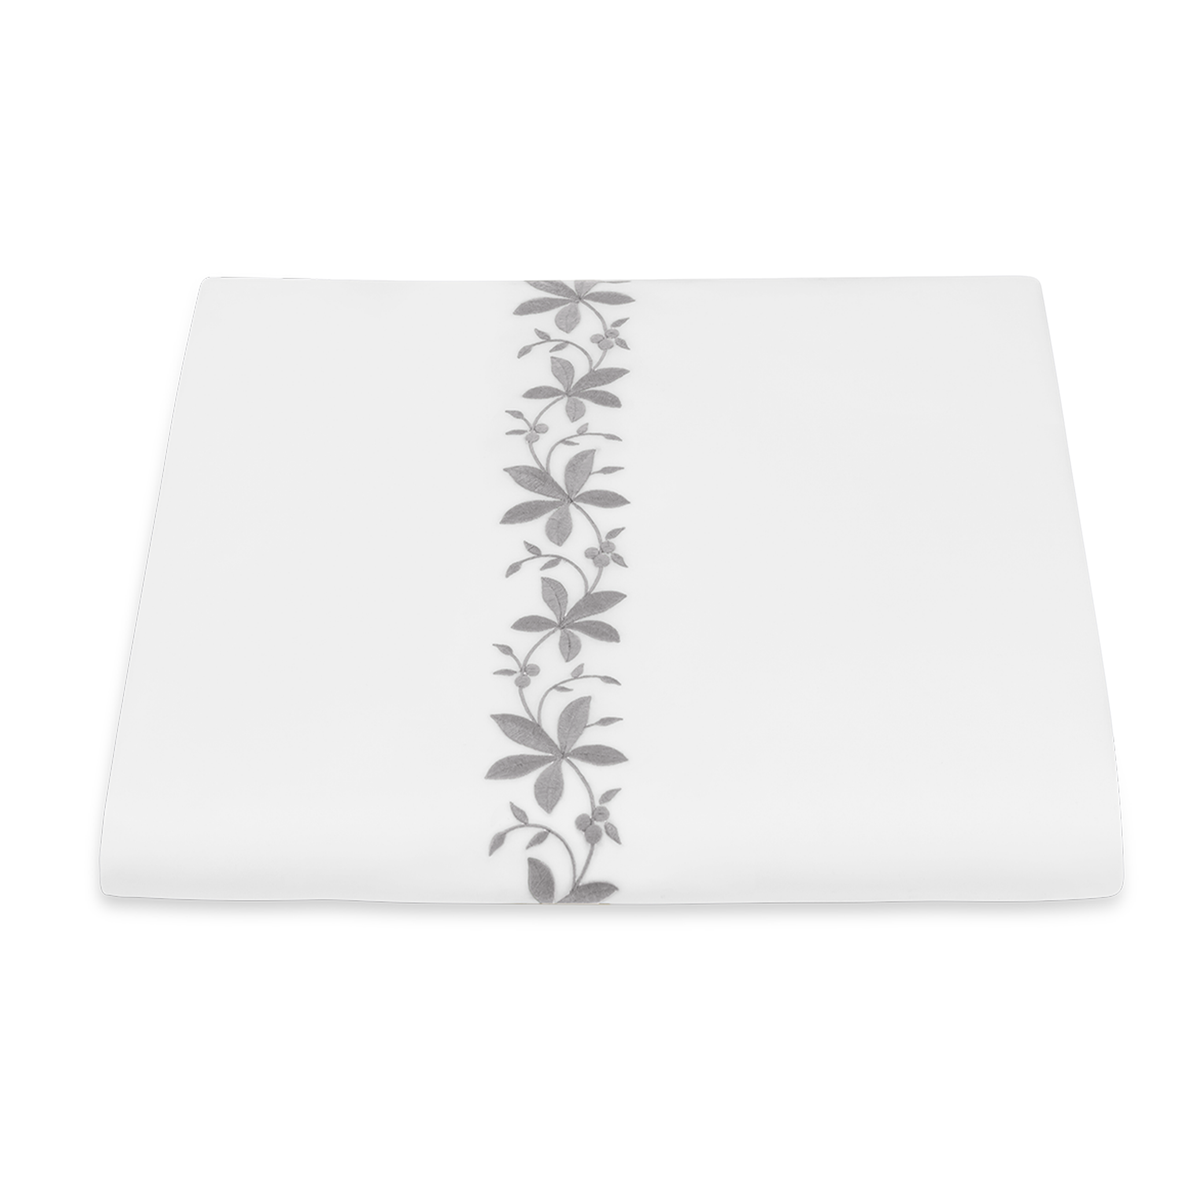 Folded Duvet Cover of Matouk Callista Bedding in Silver Color